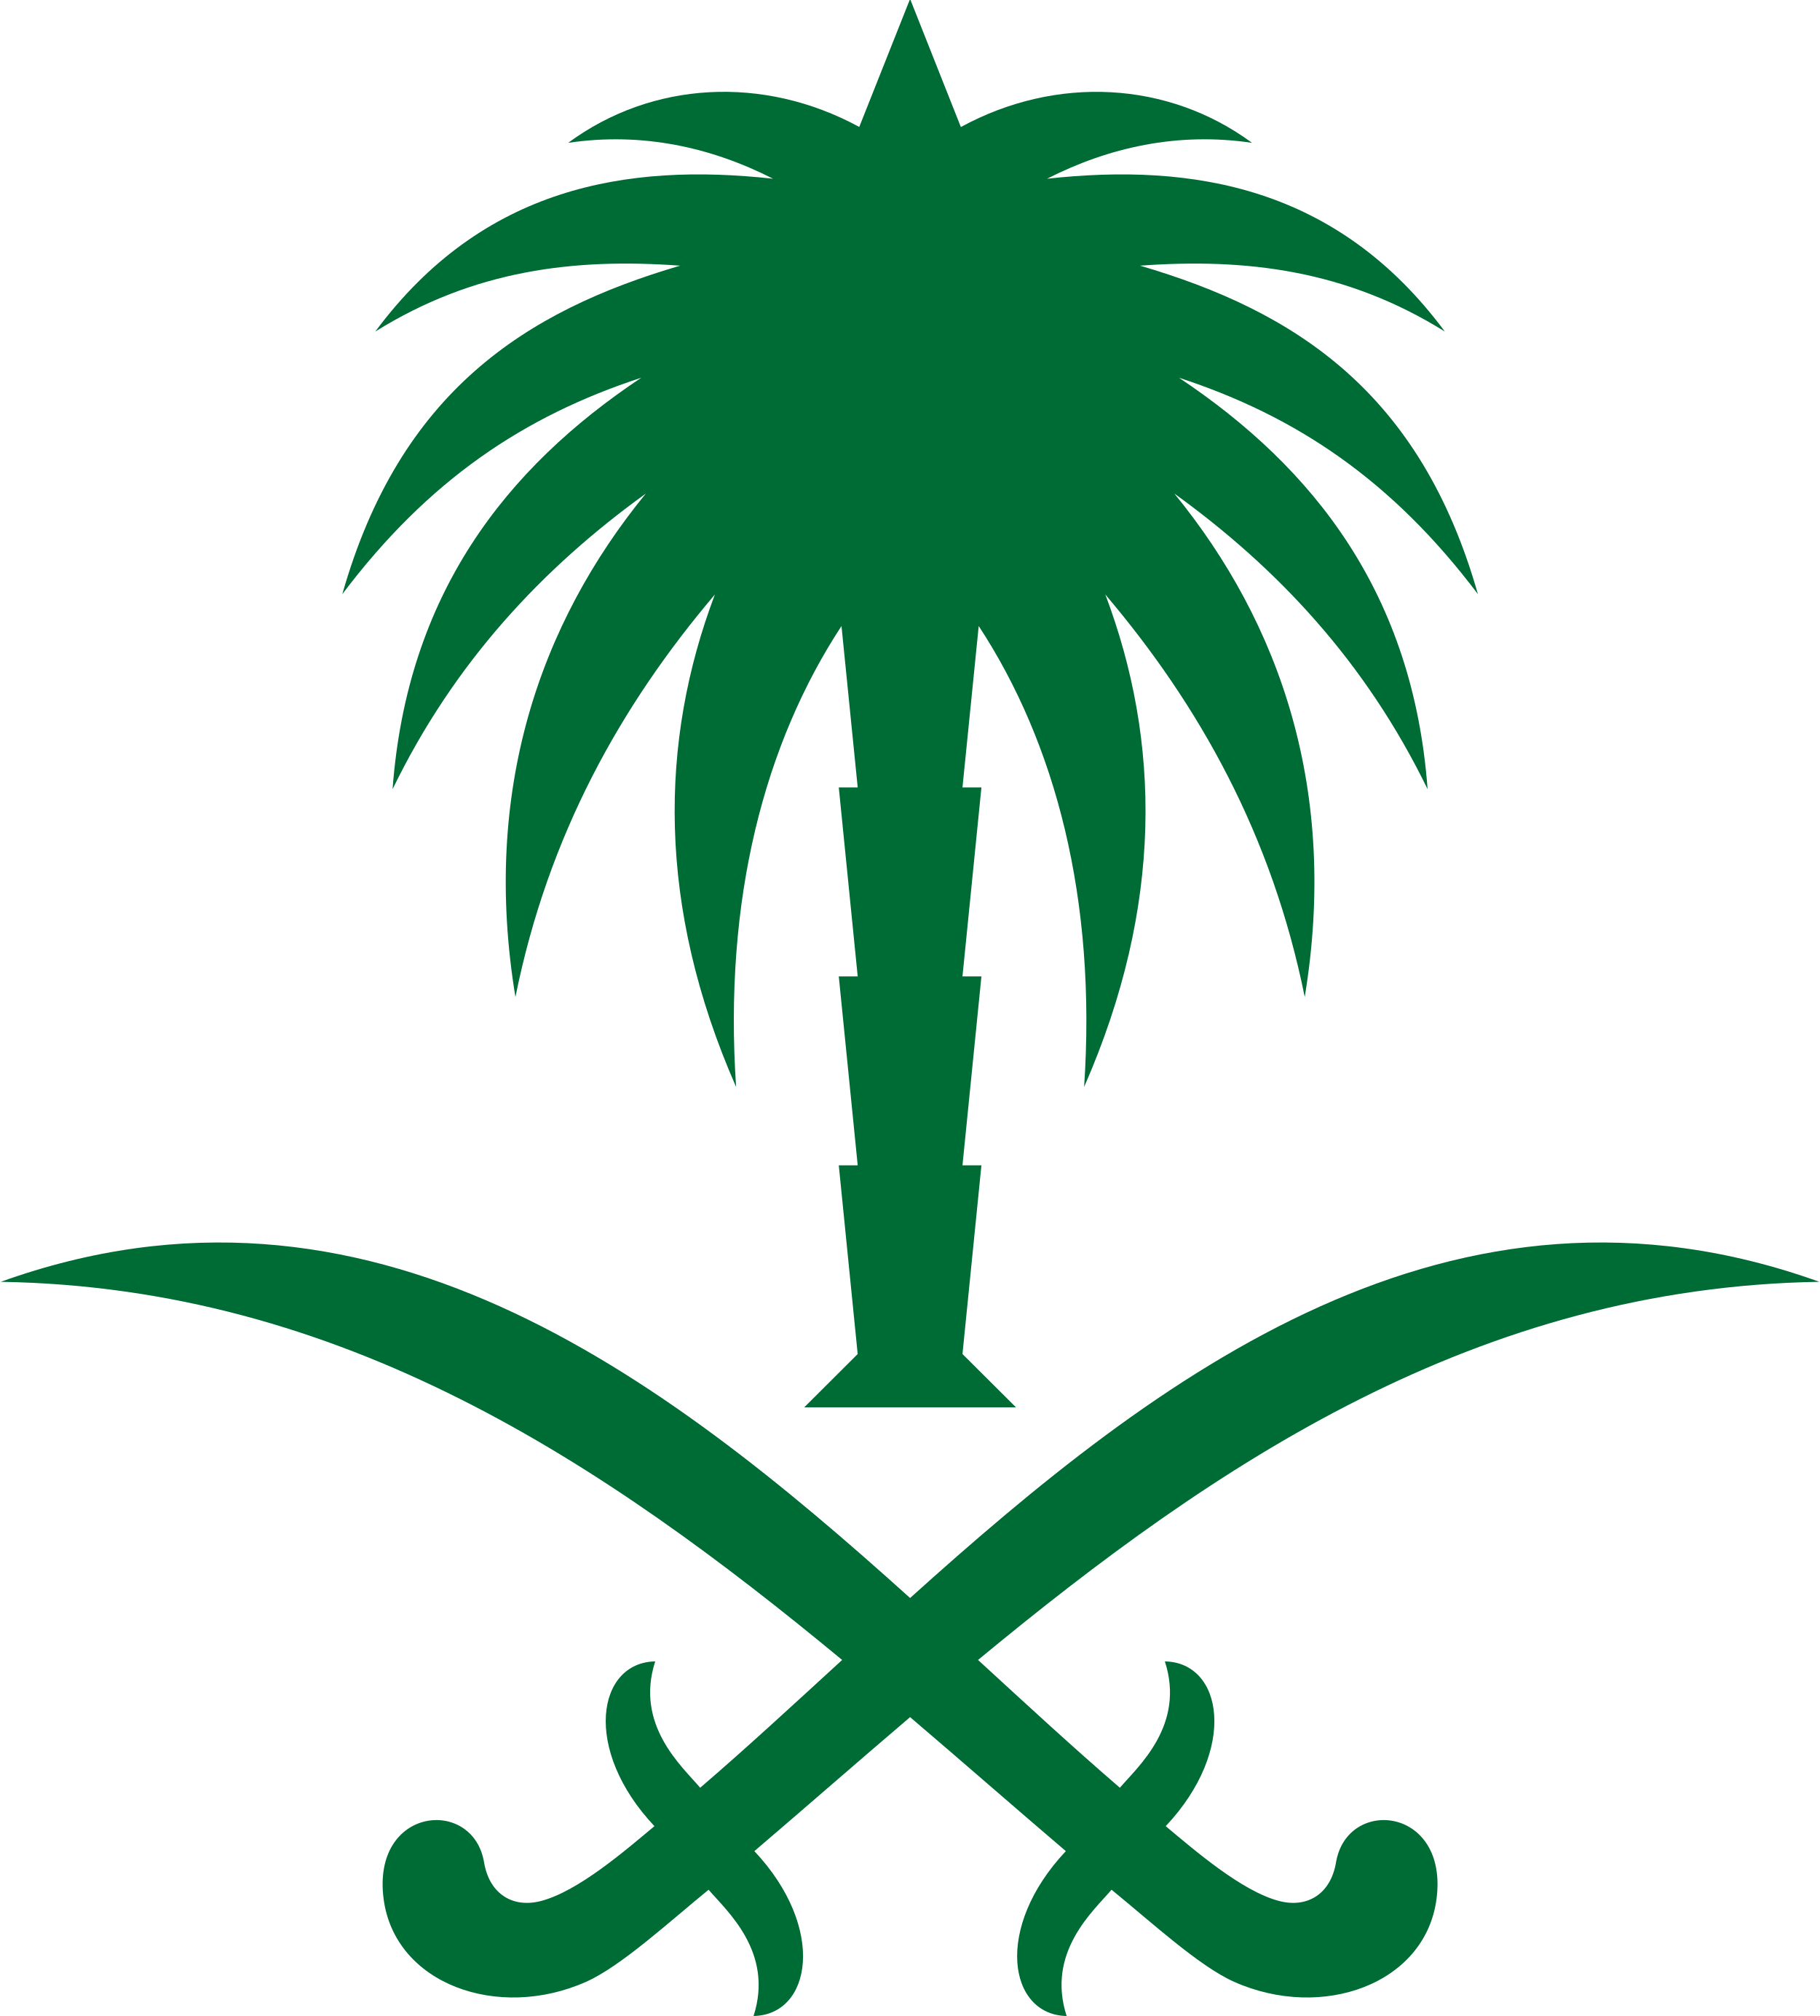 Consulate of Saudi Arabia logo